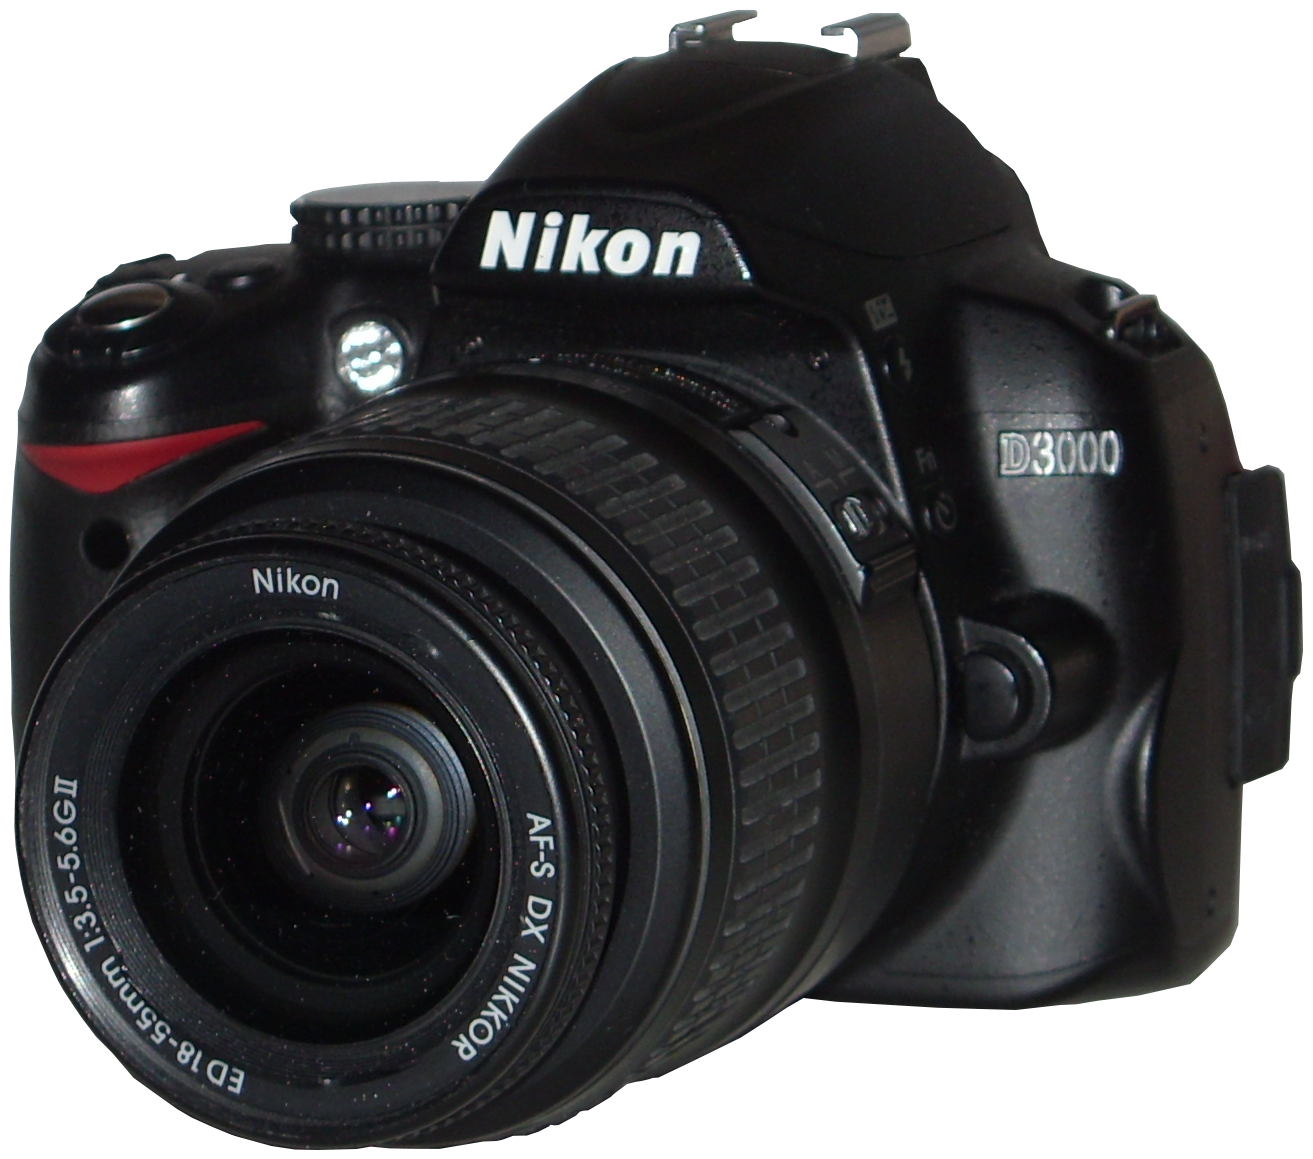 Nikon d3000 software for mac download